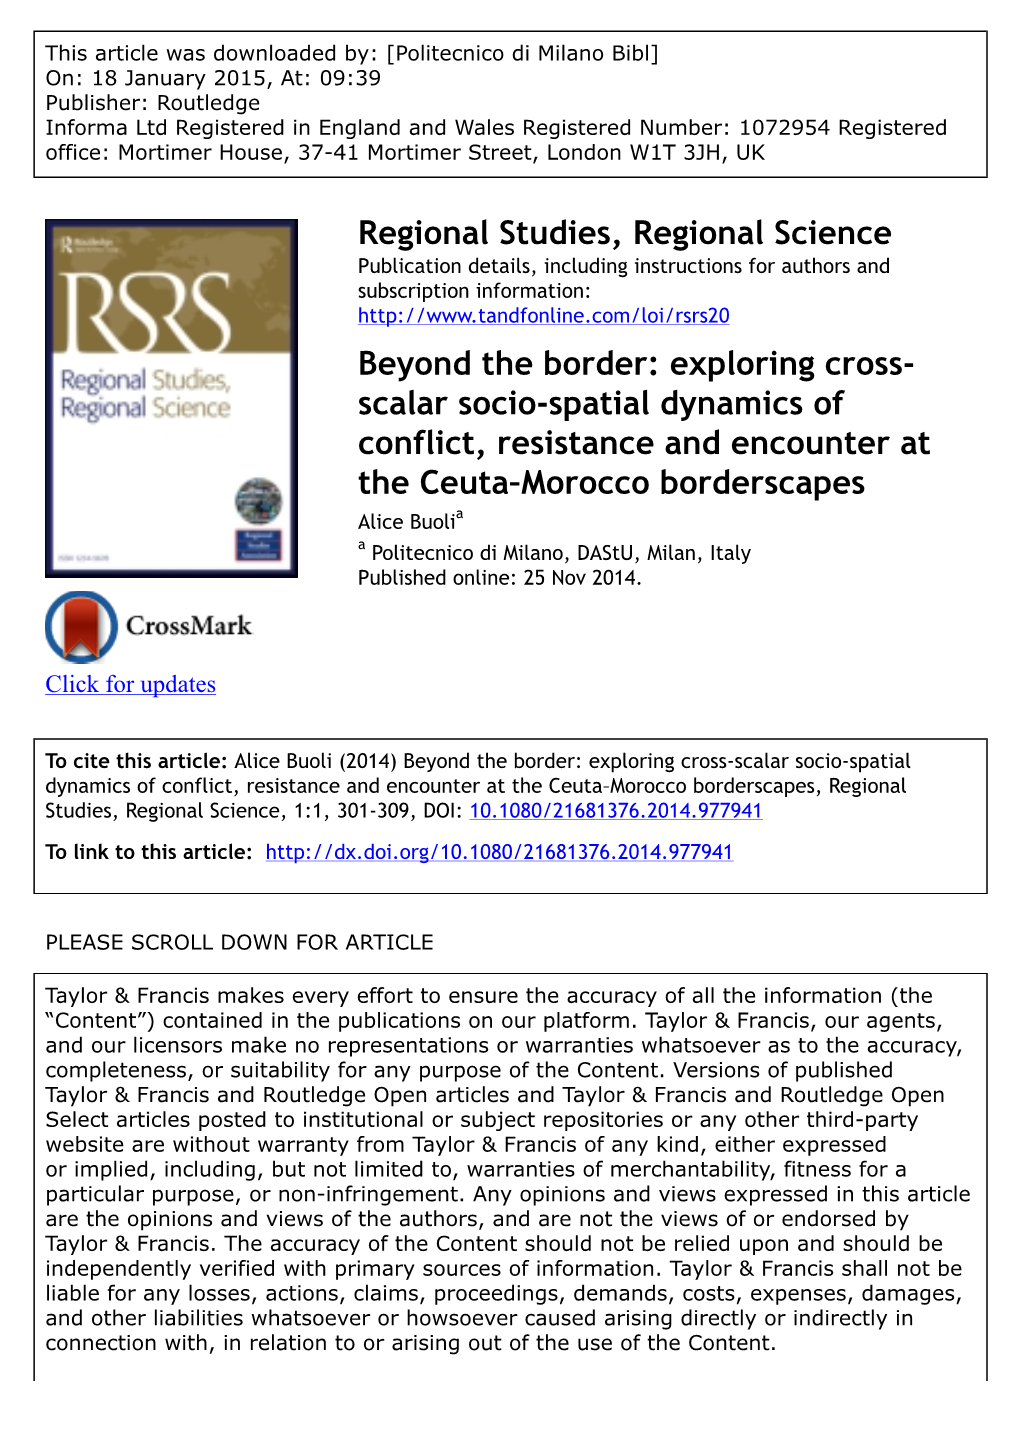 Exploring Cross-Scalar Socio-Spatial Dynamics of Conflict, Resistance And